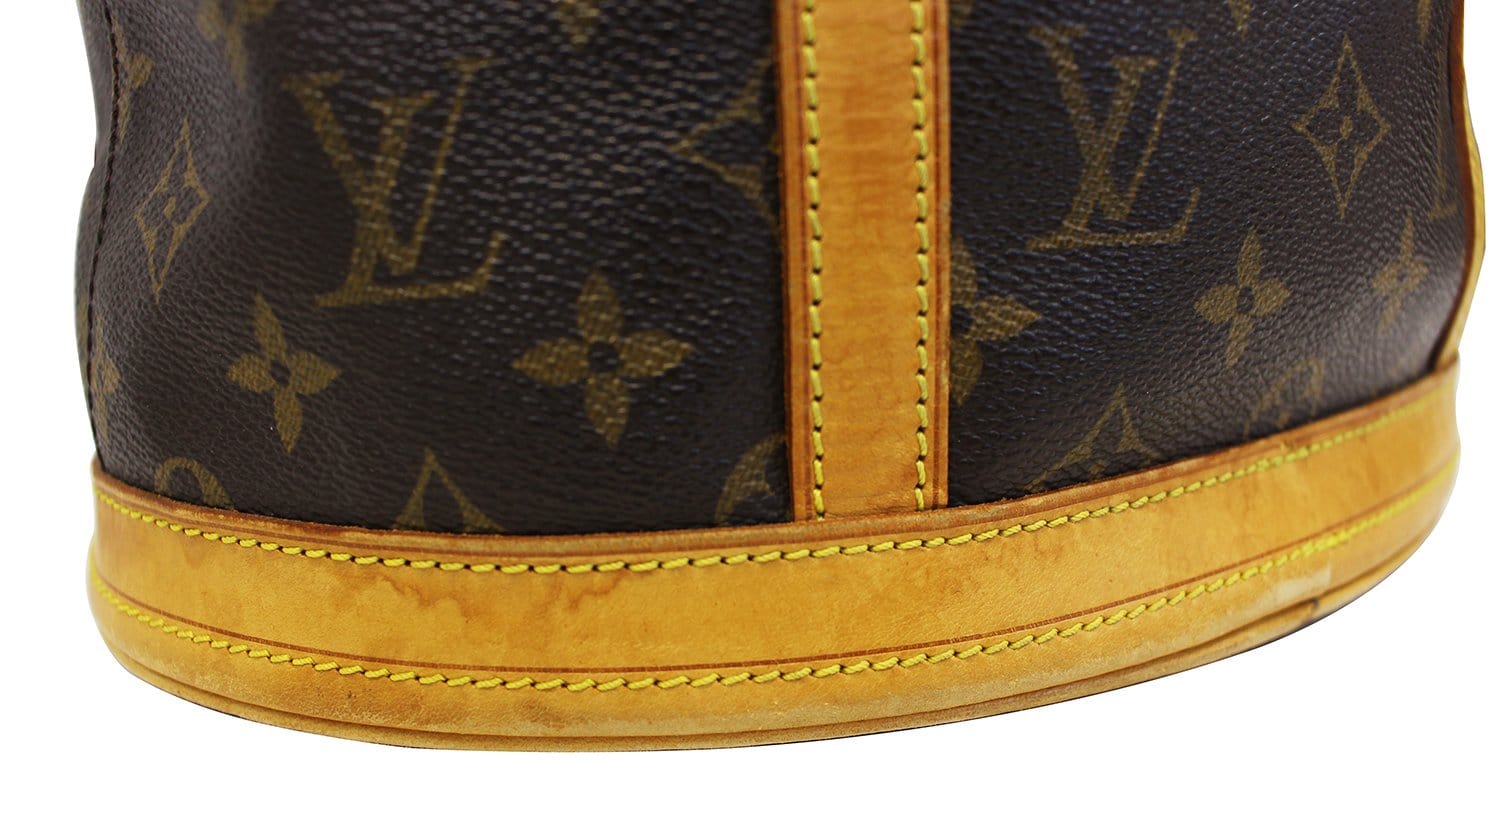 Monogram Luxury Barrel Bag For Women New Fashion Shoulder Bucket